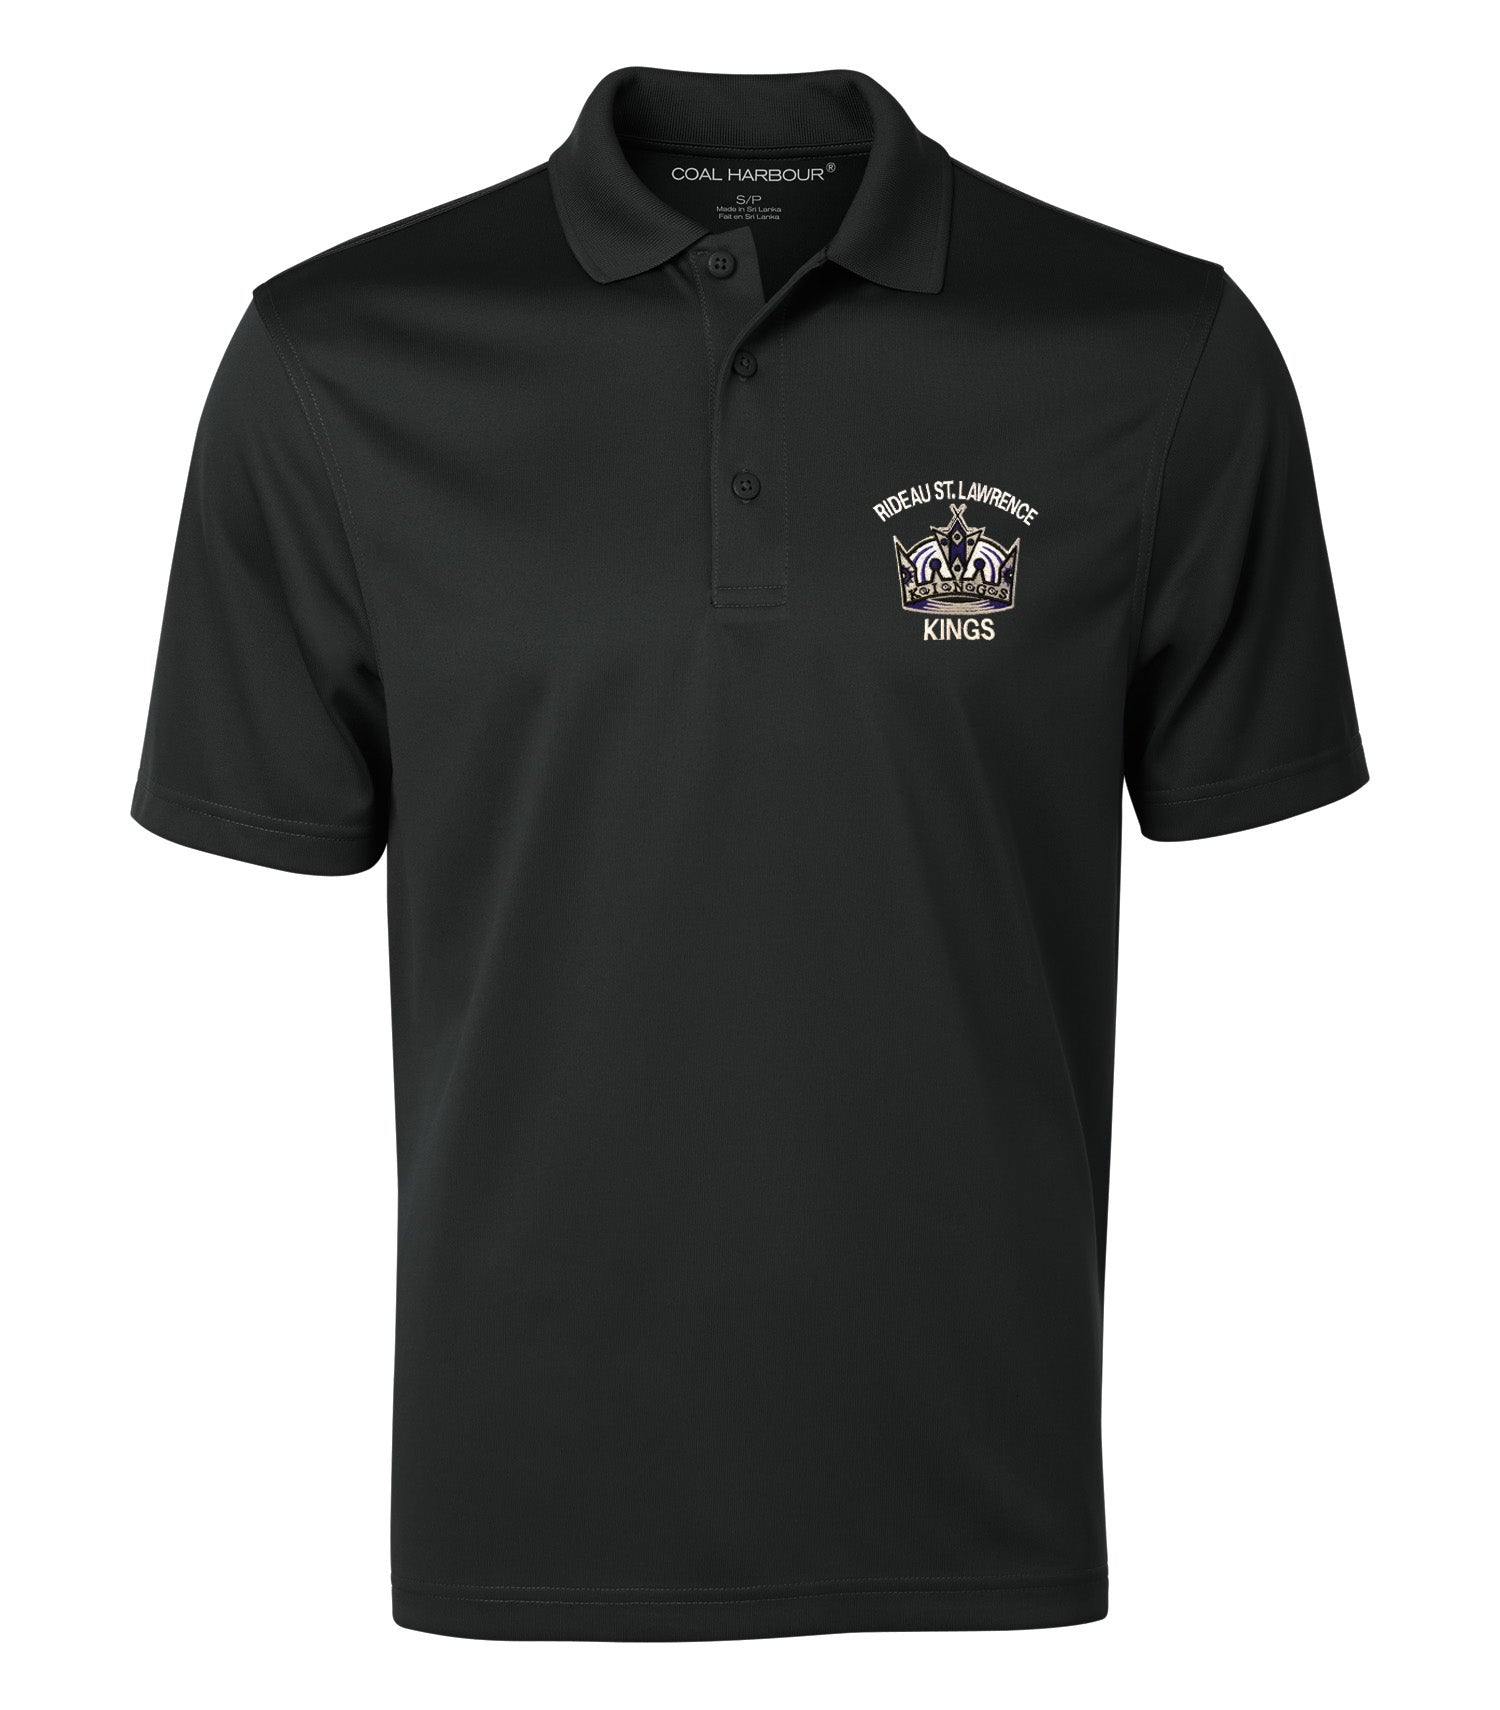 KINGS - Golf Shirt - Inventory